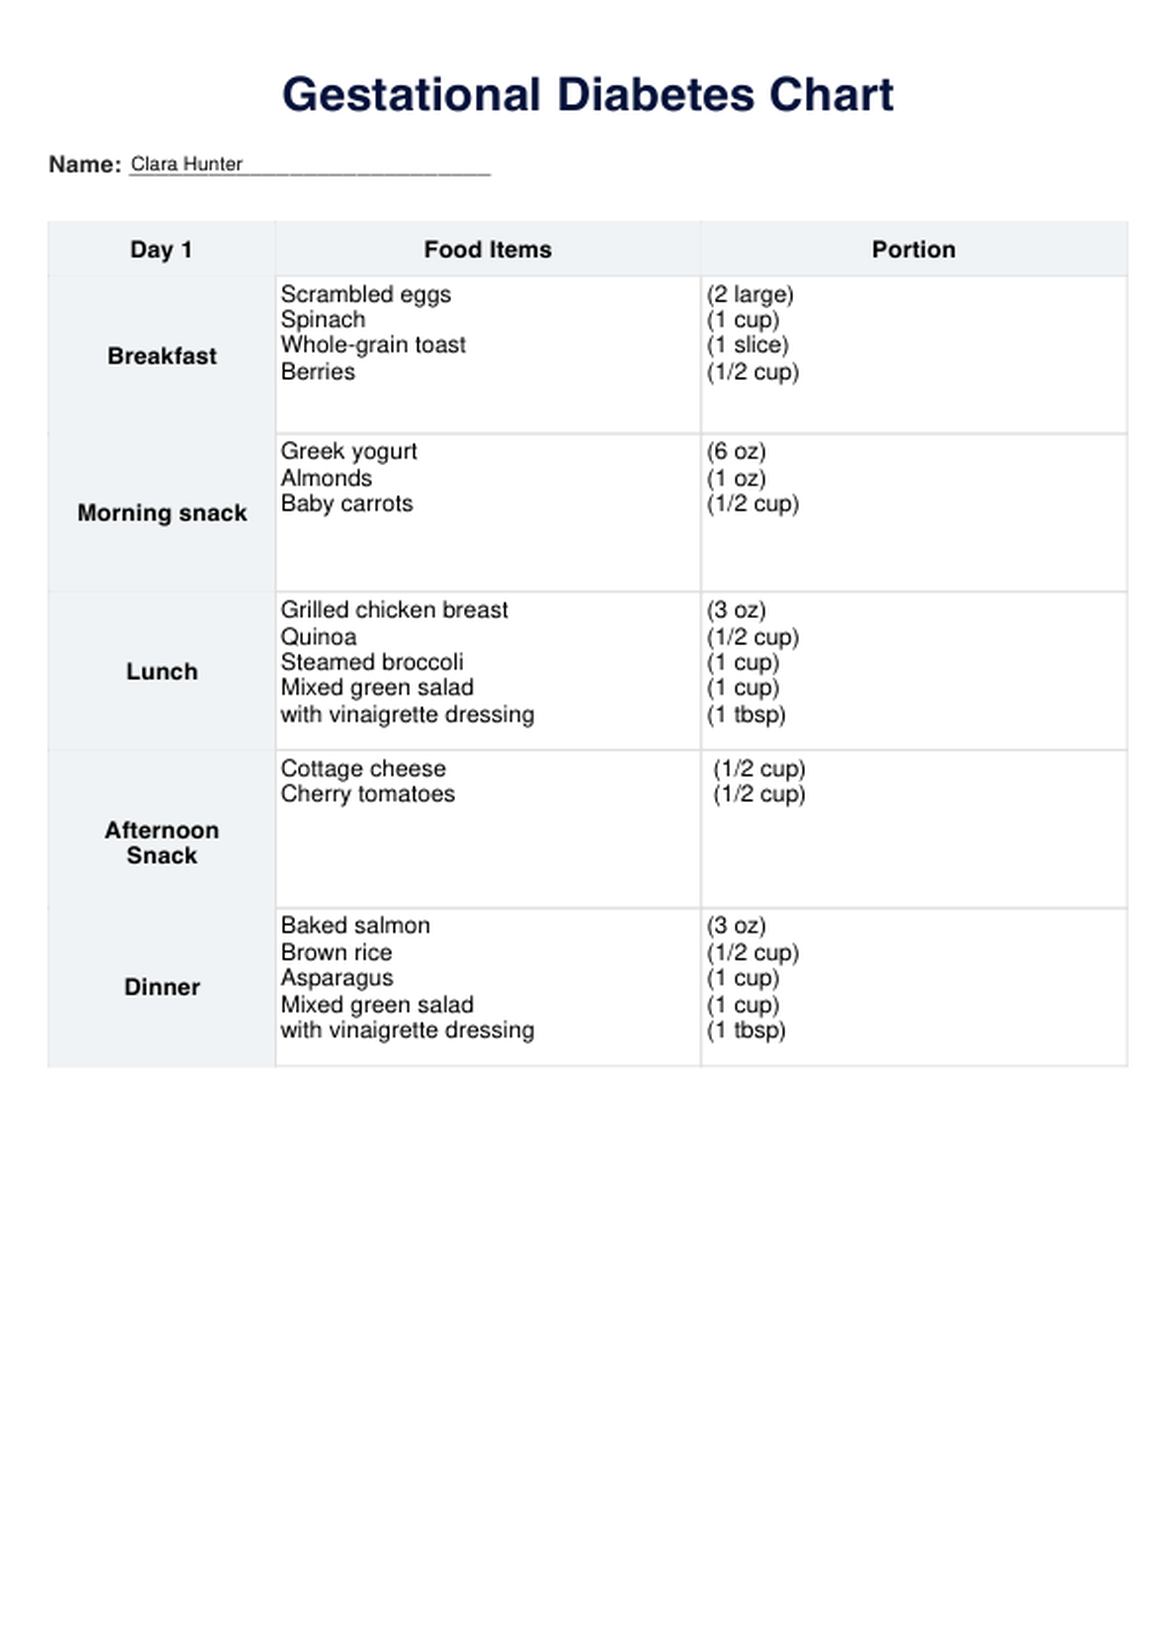 Gestational Diabetes Diet Chart PDF Example